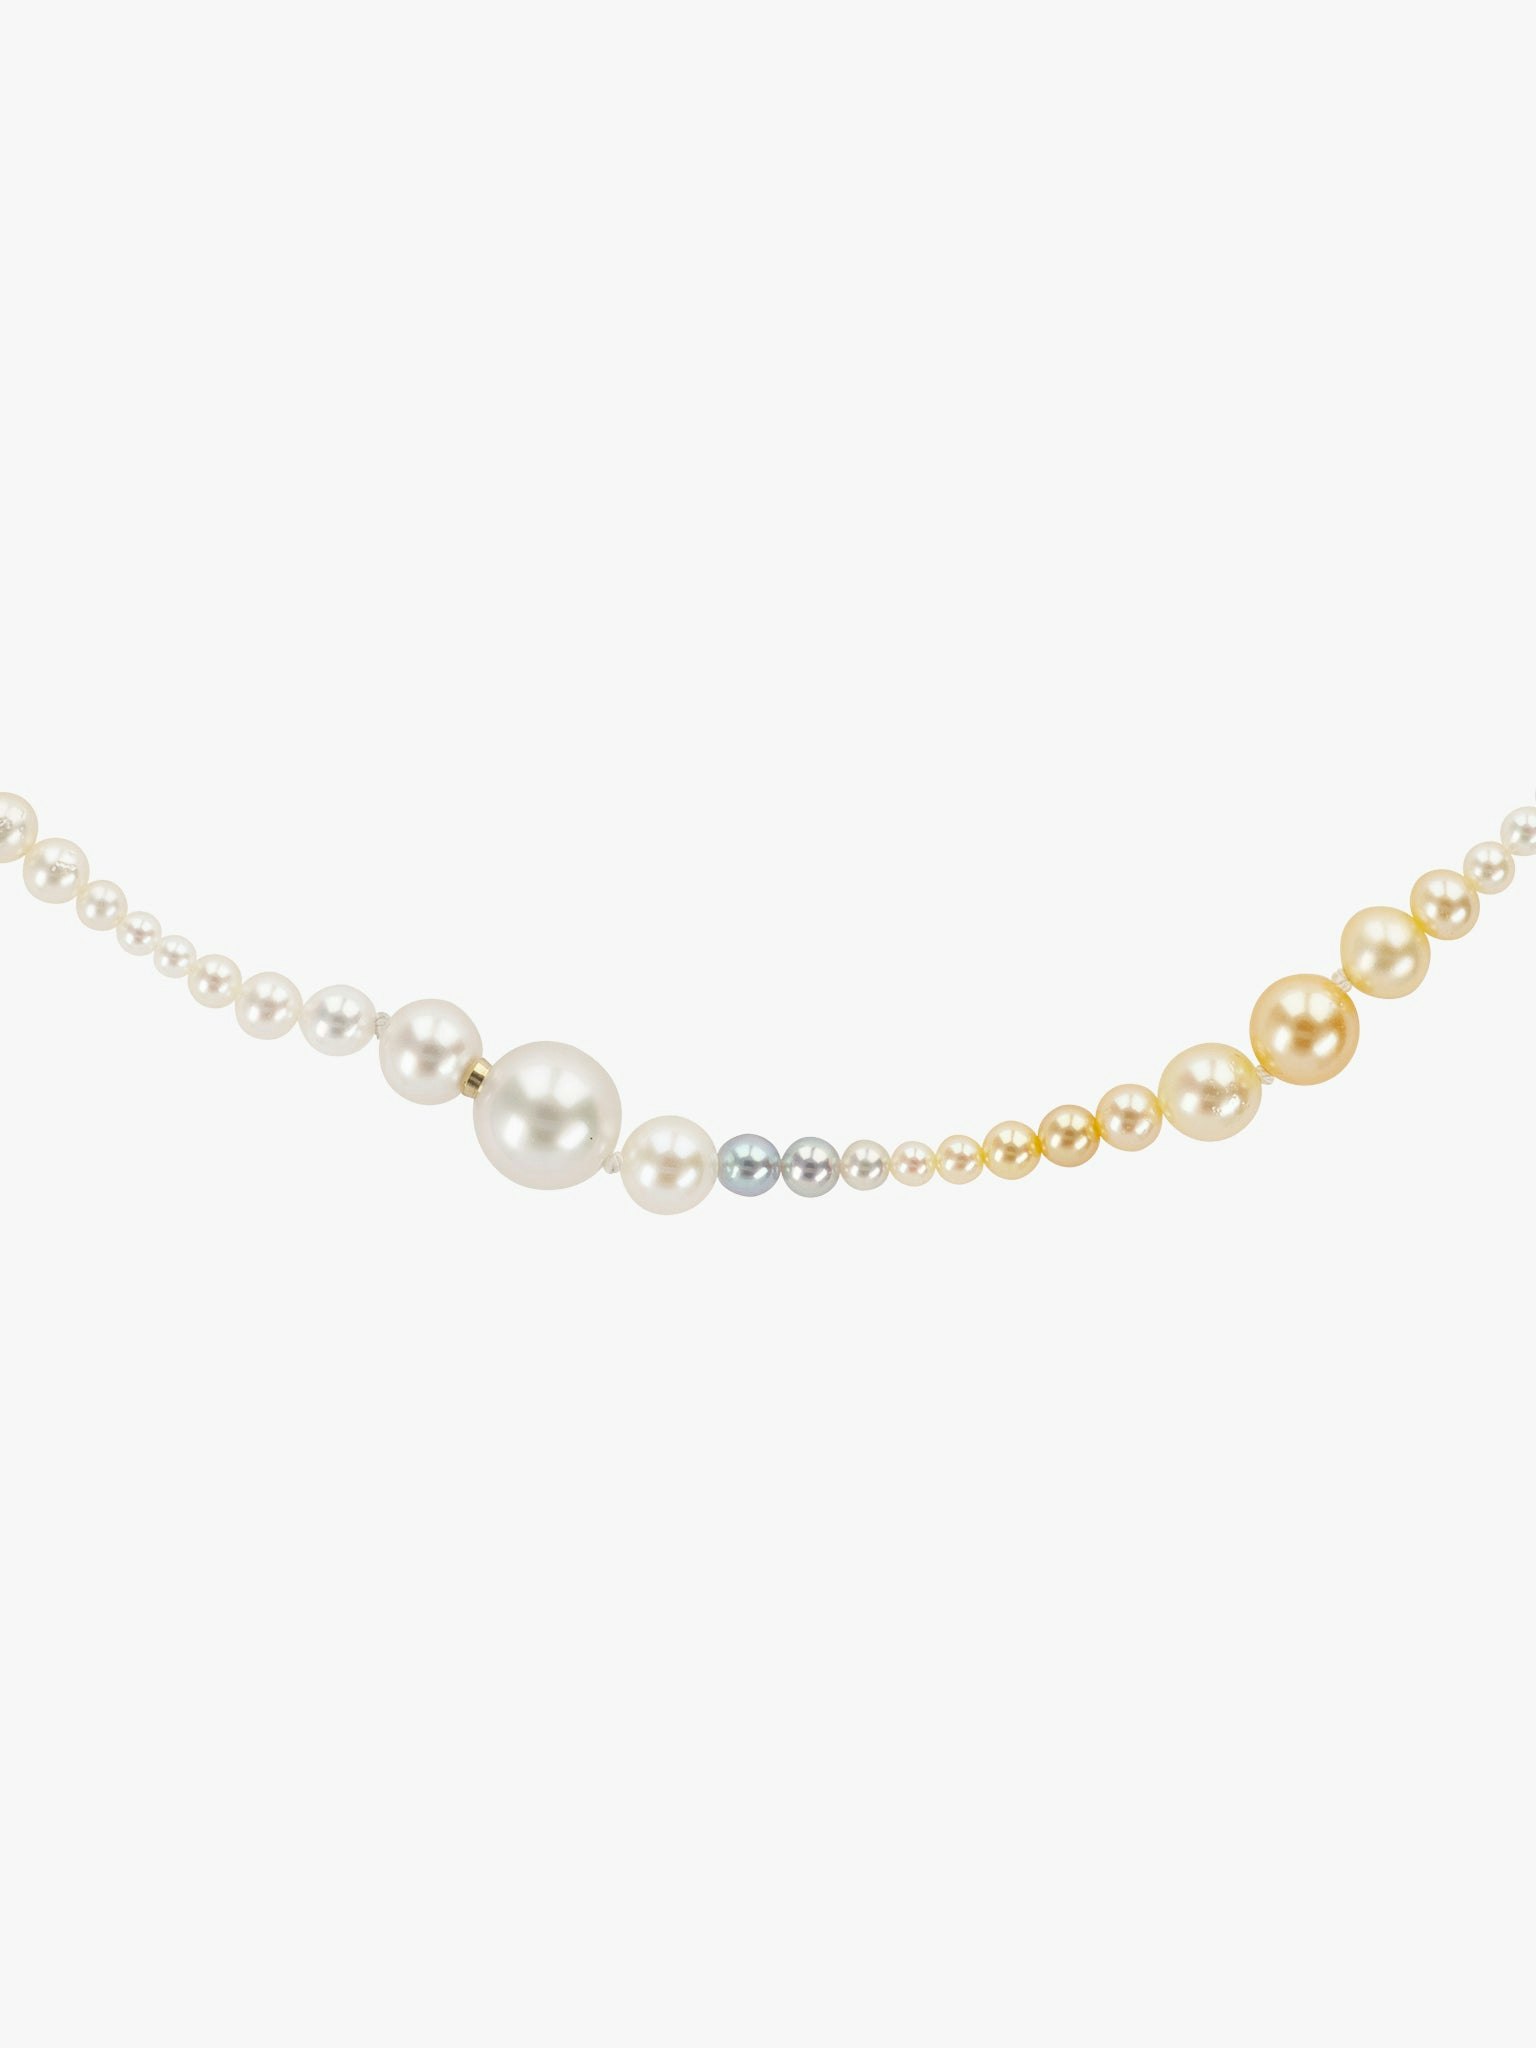 Vela pearl necklace photo 3